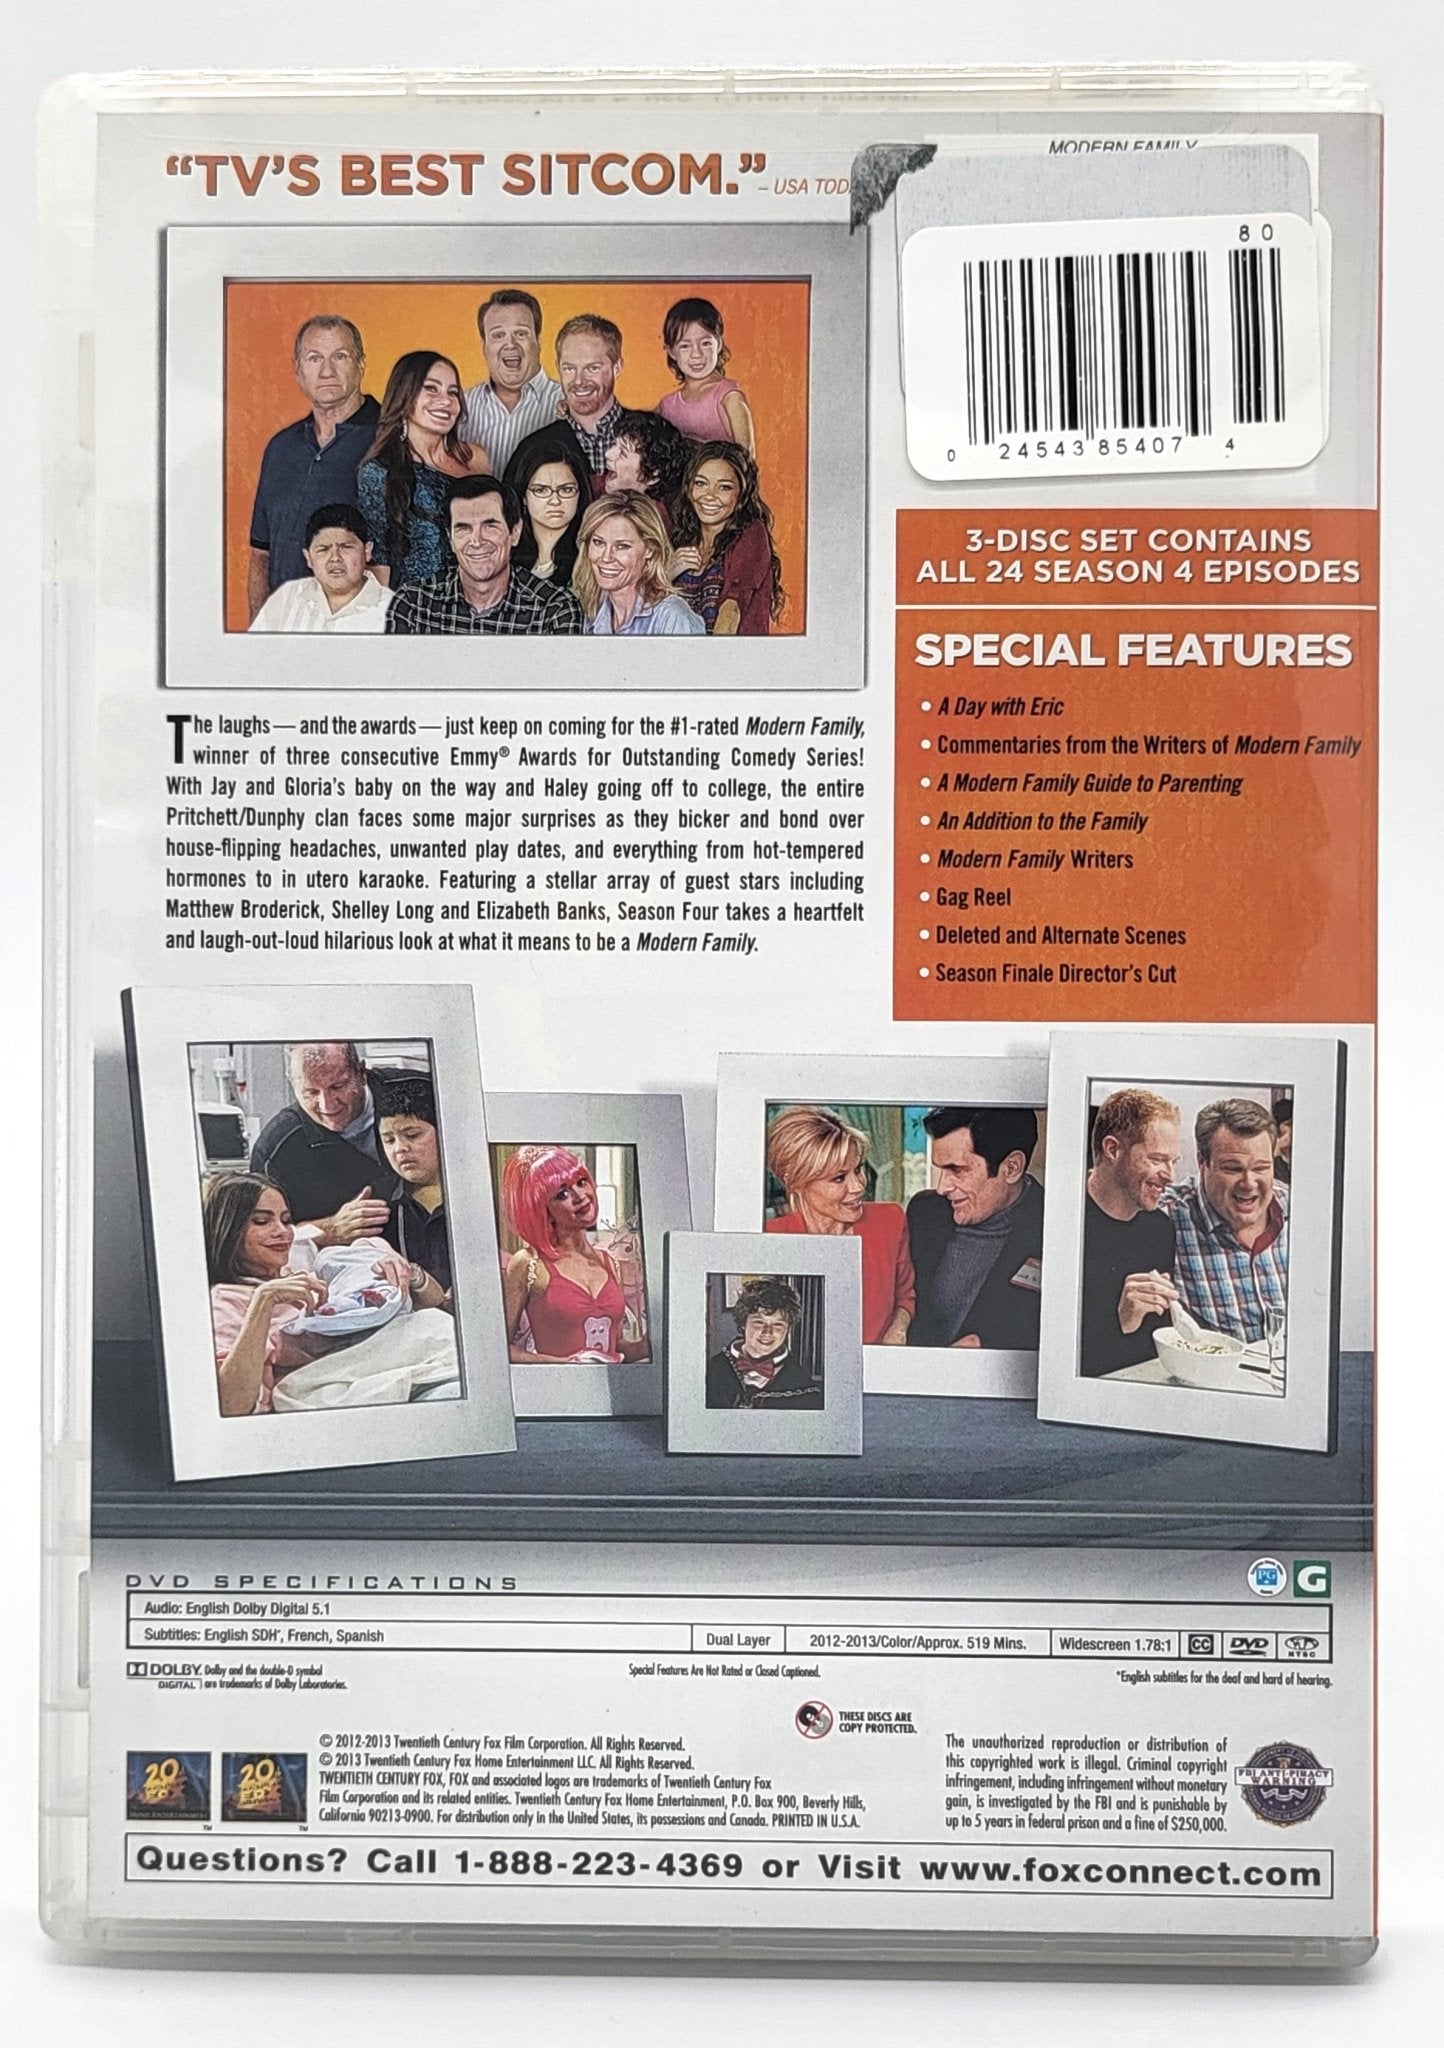 20th Century Fox - Modern Family - Season 4 | DVD | Widescreen - Complete 4th Season - 3 Disc Set - DVD - Steady Bunny Shop